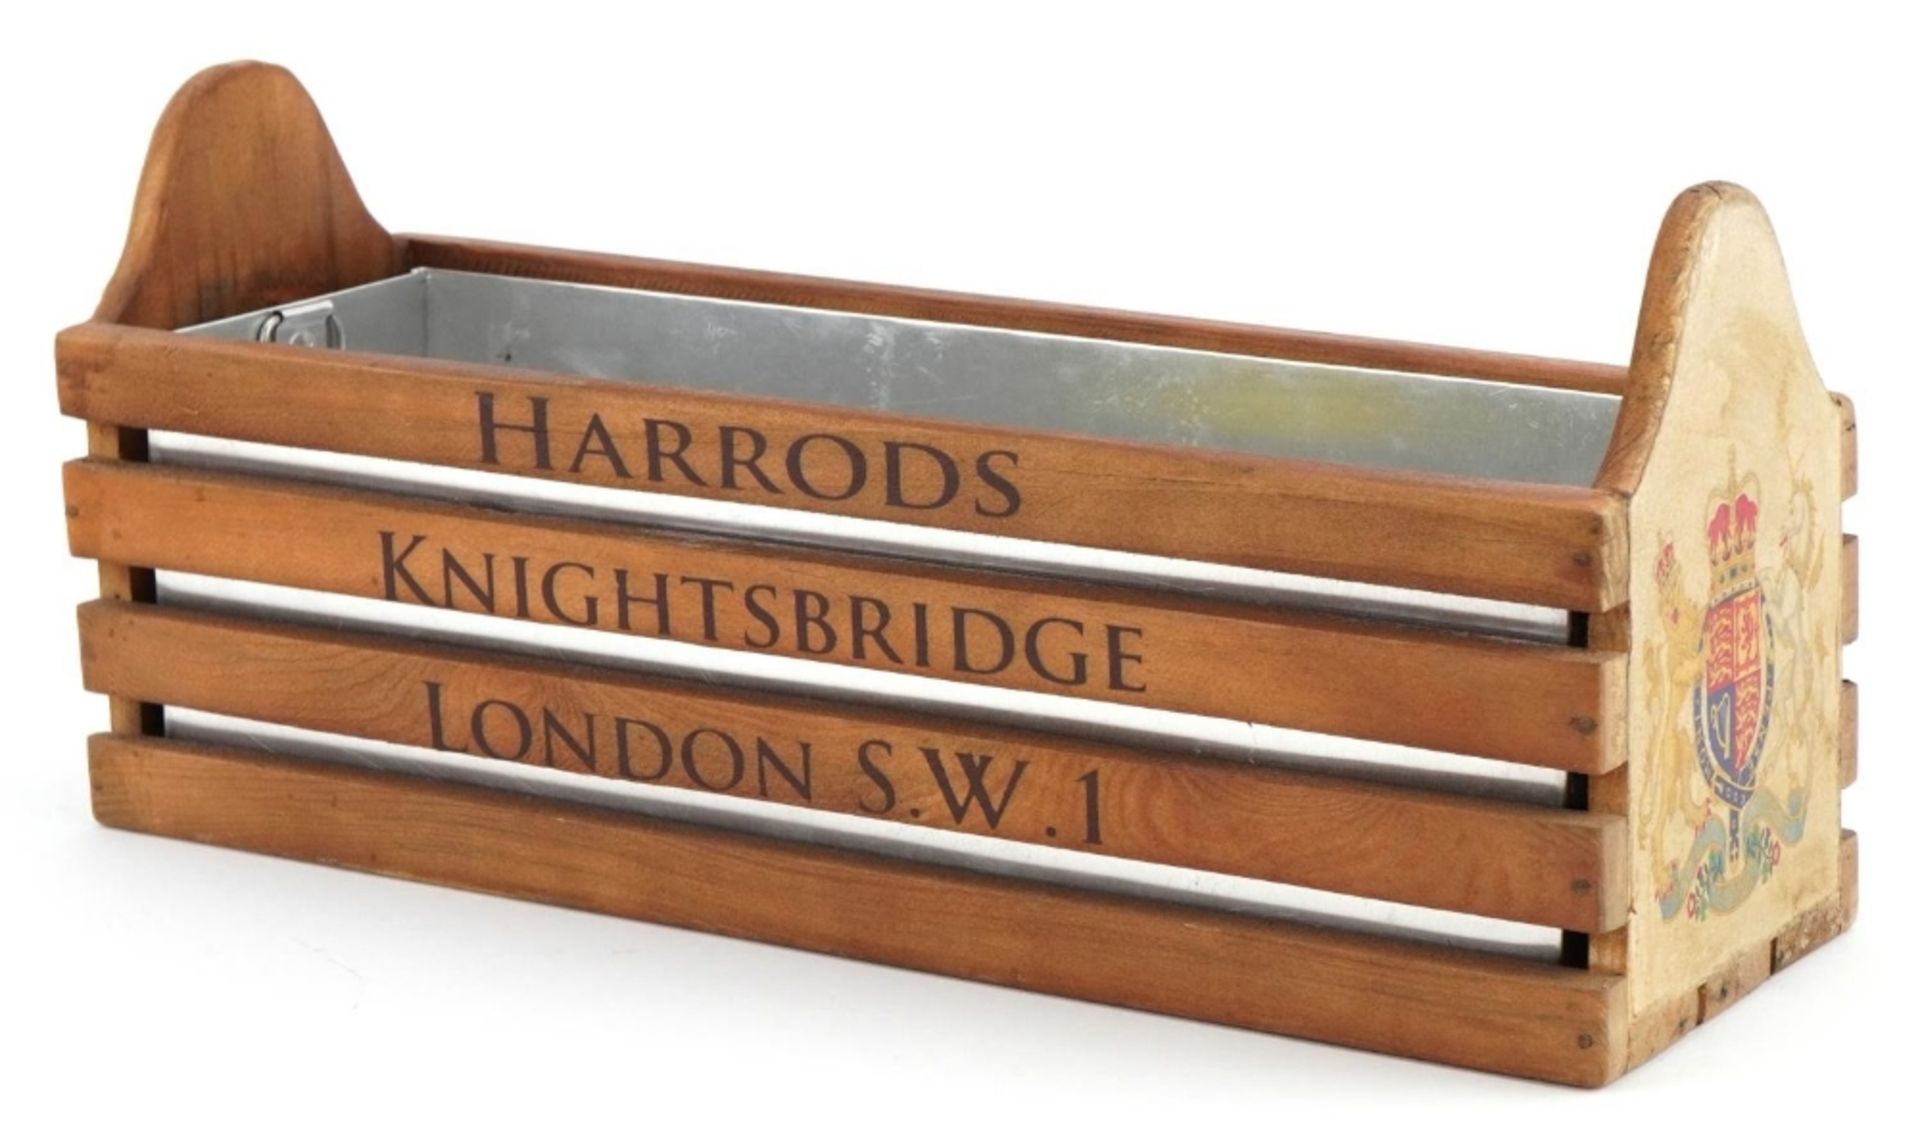 Hardwood Harrods design planter with metal liner, 15cm H x 35cm W x 11.5cm D : For further - Image 2 of 3